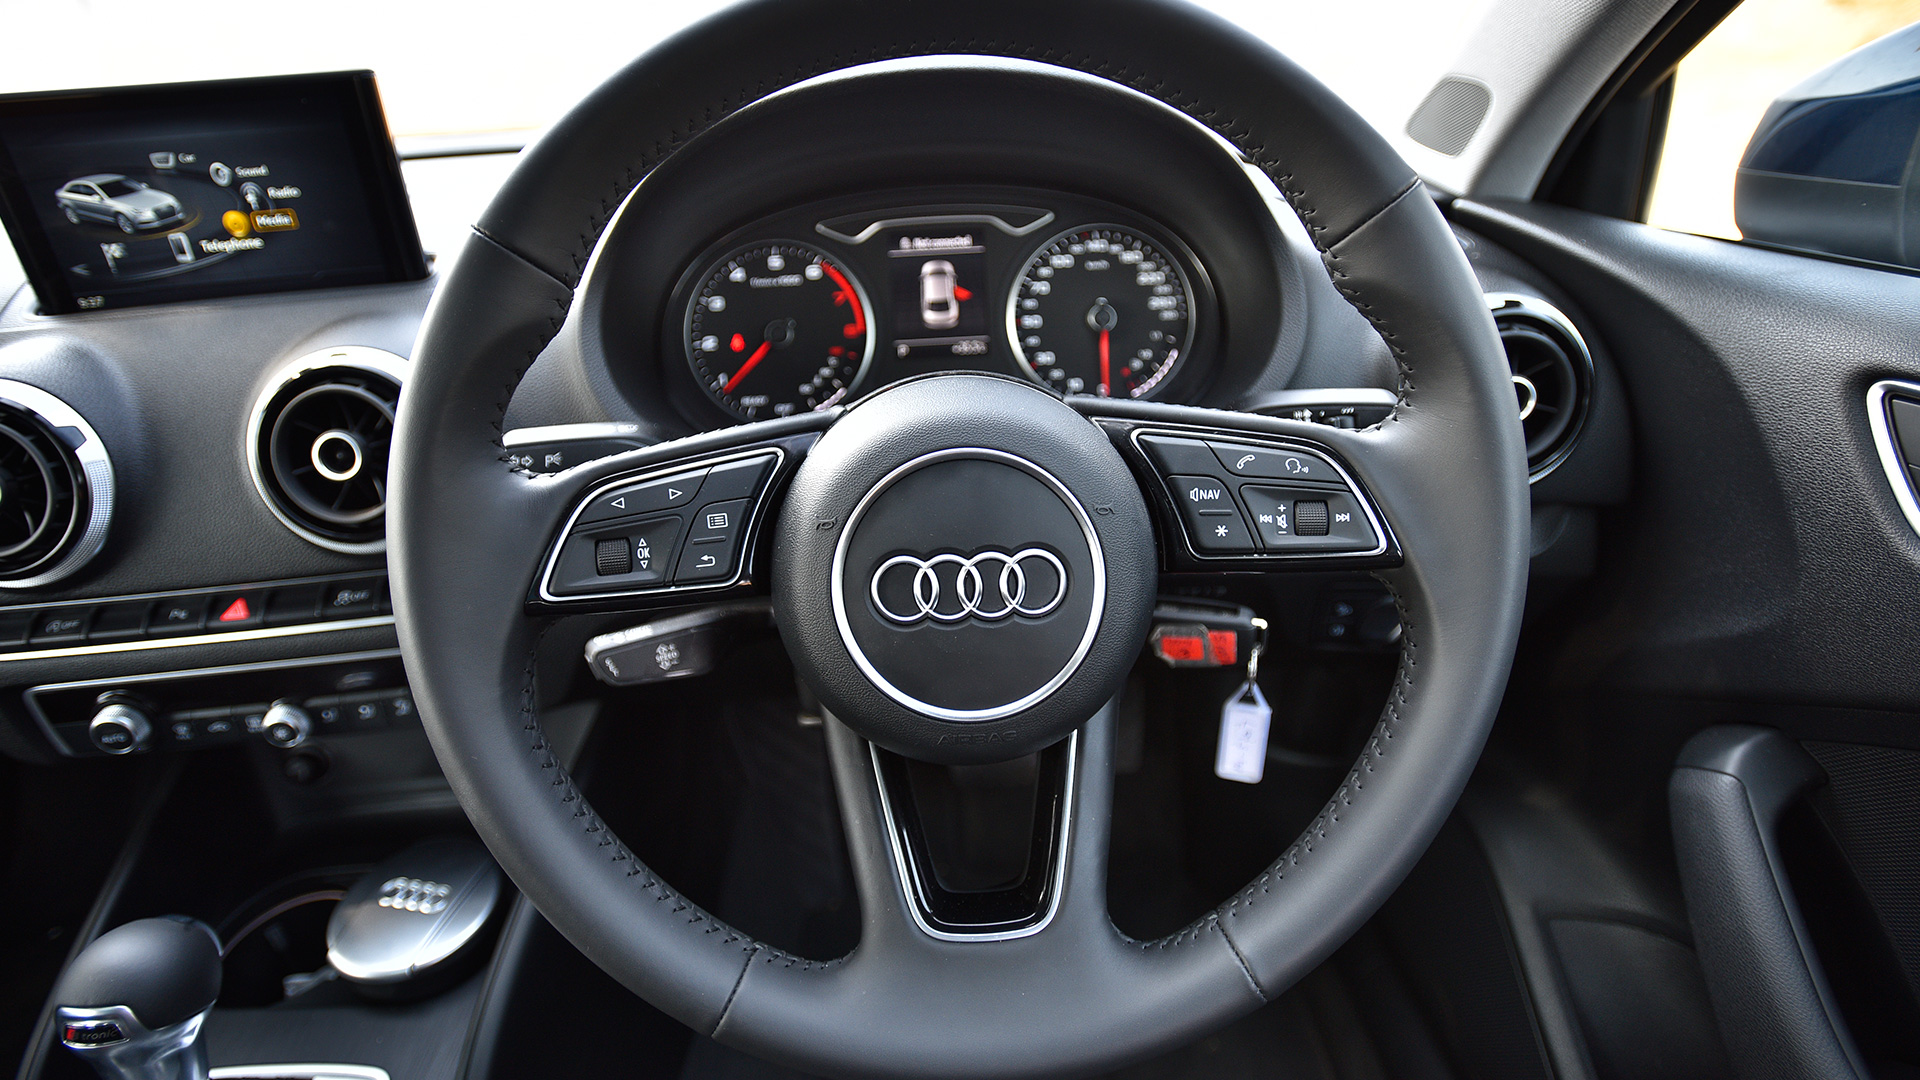 Audi A3 2017 35 TFSI Technology Interior